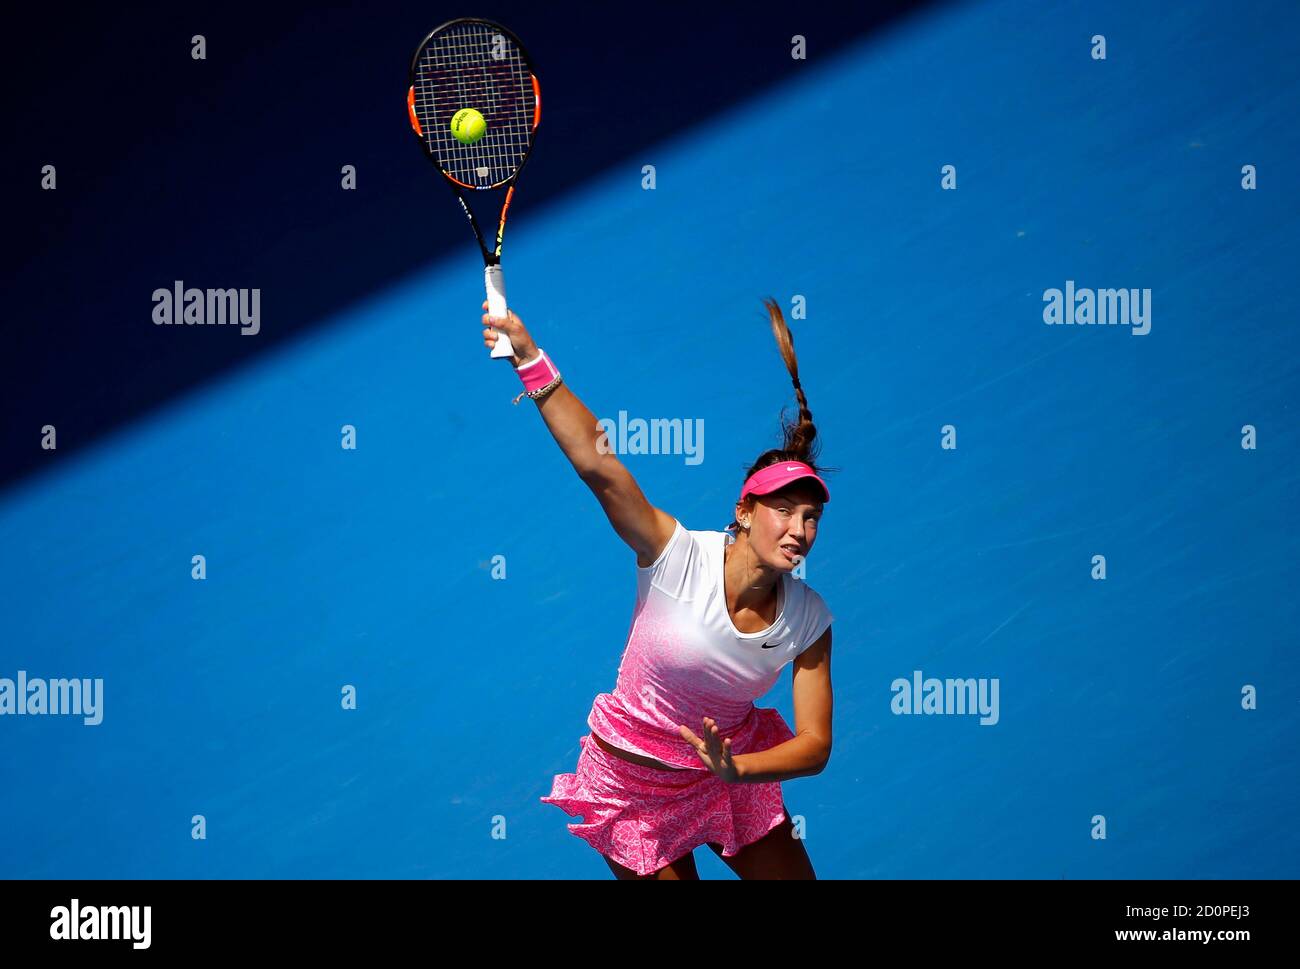 Slovakia's Tereza Mihalikova serves to Britain's Katie Swan during their junior girls' singles final at the Australian Open tennis tournament in Melbourne January 31, 2015. REUTERS/Carlos Barria (AUSTRALIA - Tags: SPORT TENNIS) Stock Photo